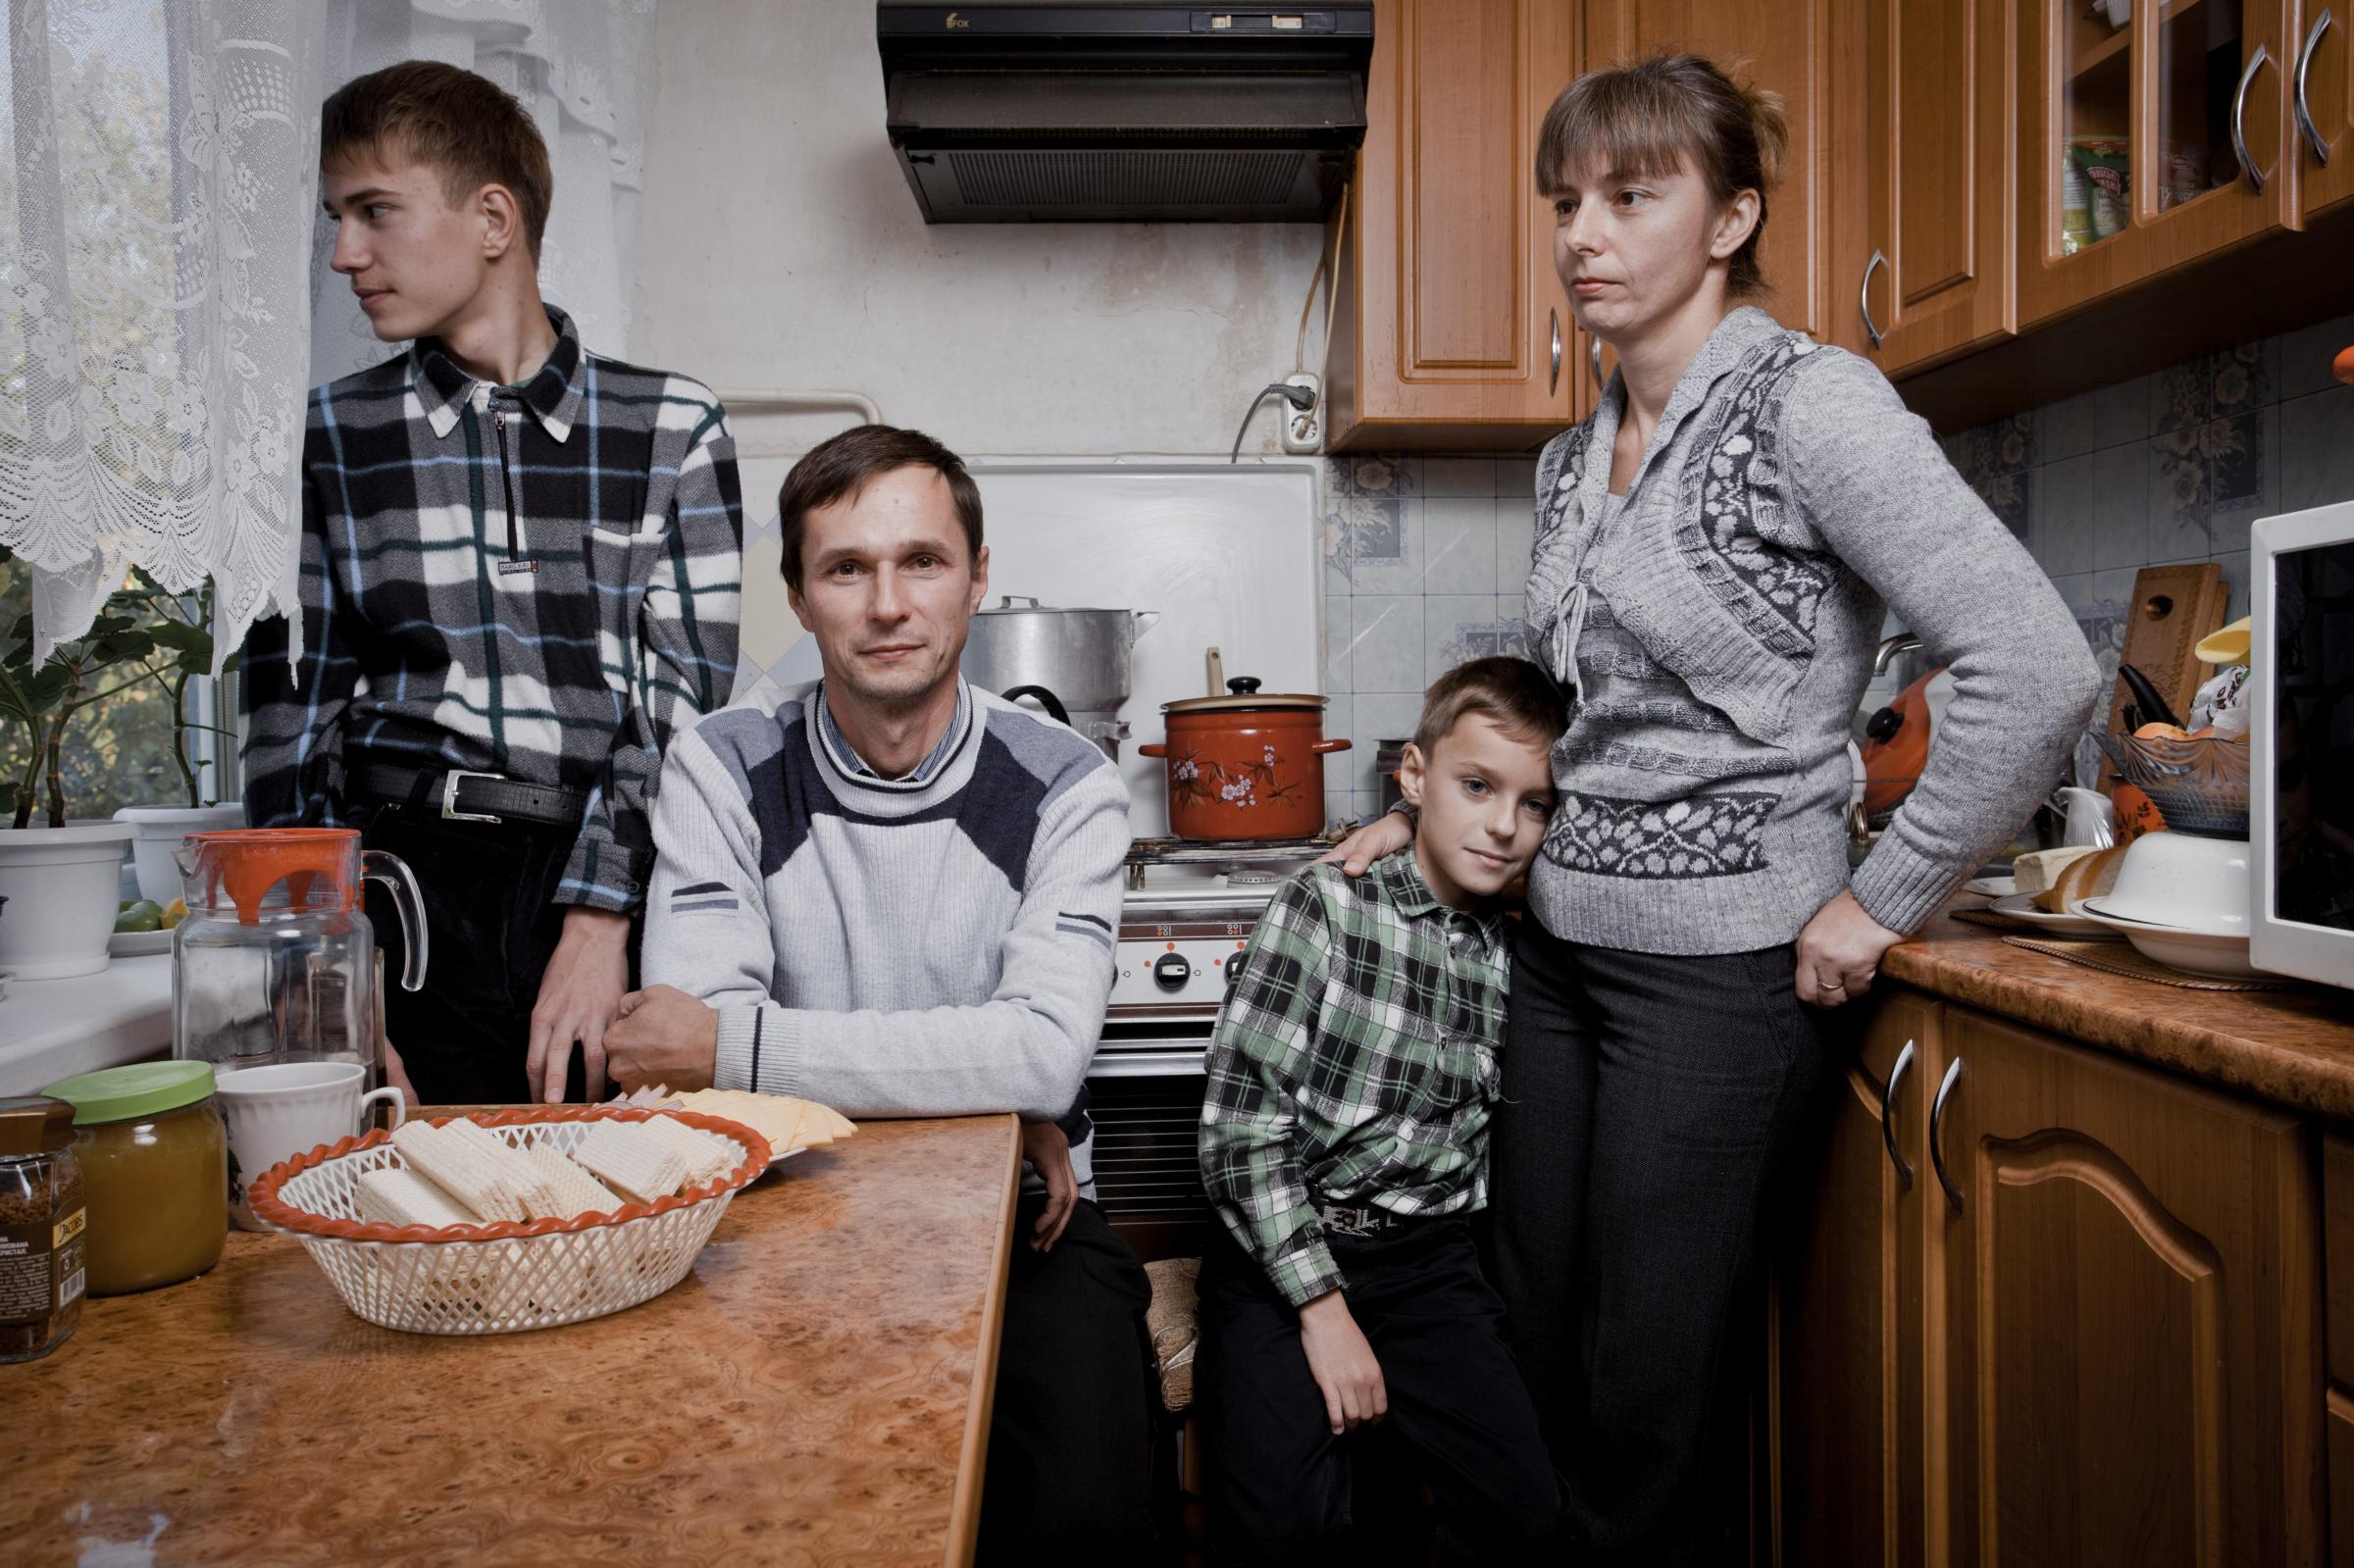 HOME - SLAVYANSK, UKRAINE, OCTOBER 19, 2014:
Yevgen Hutsman, 41...